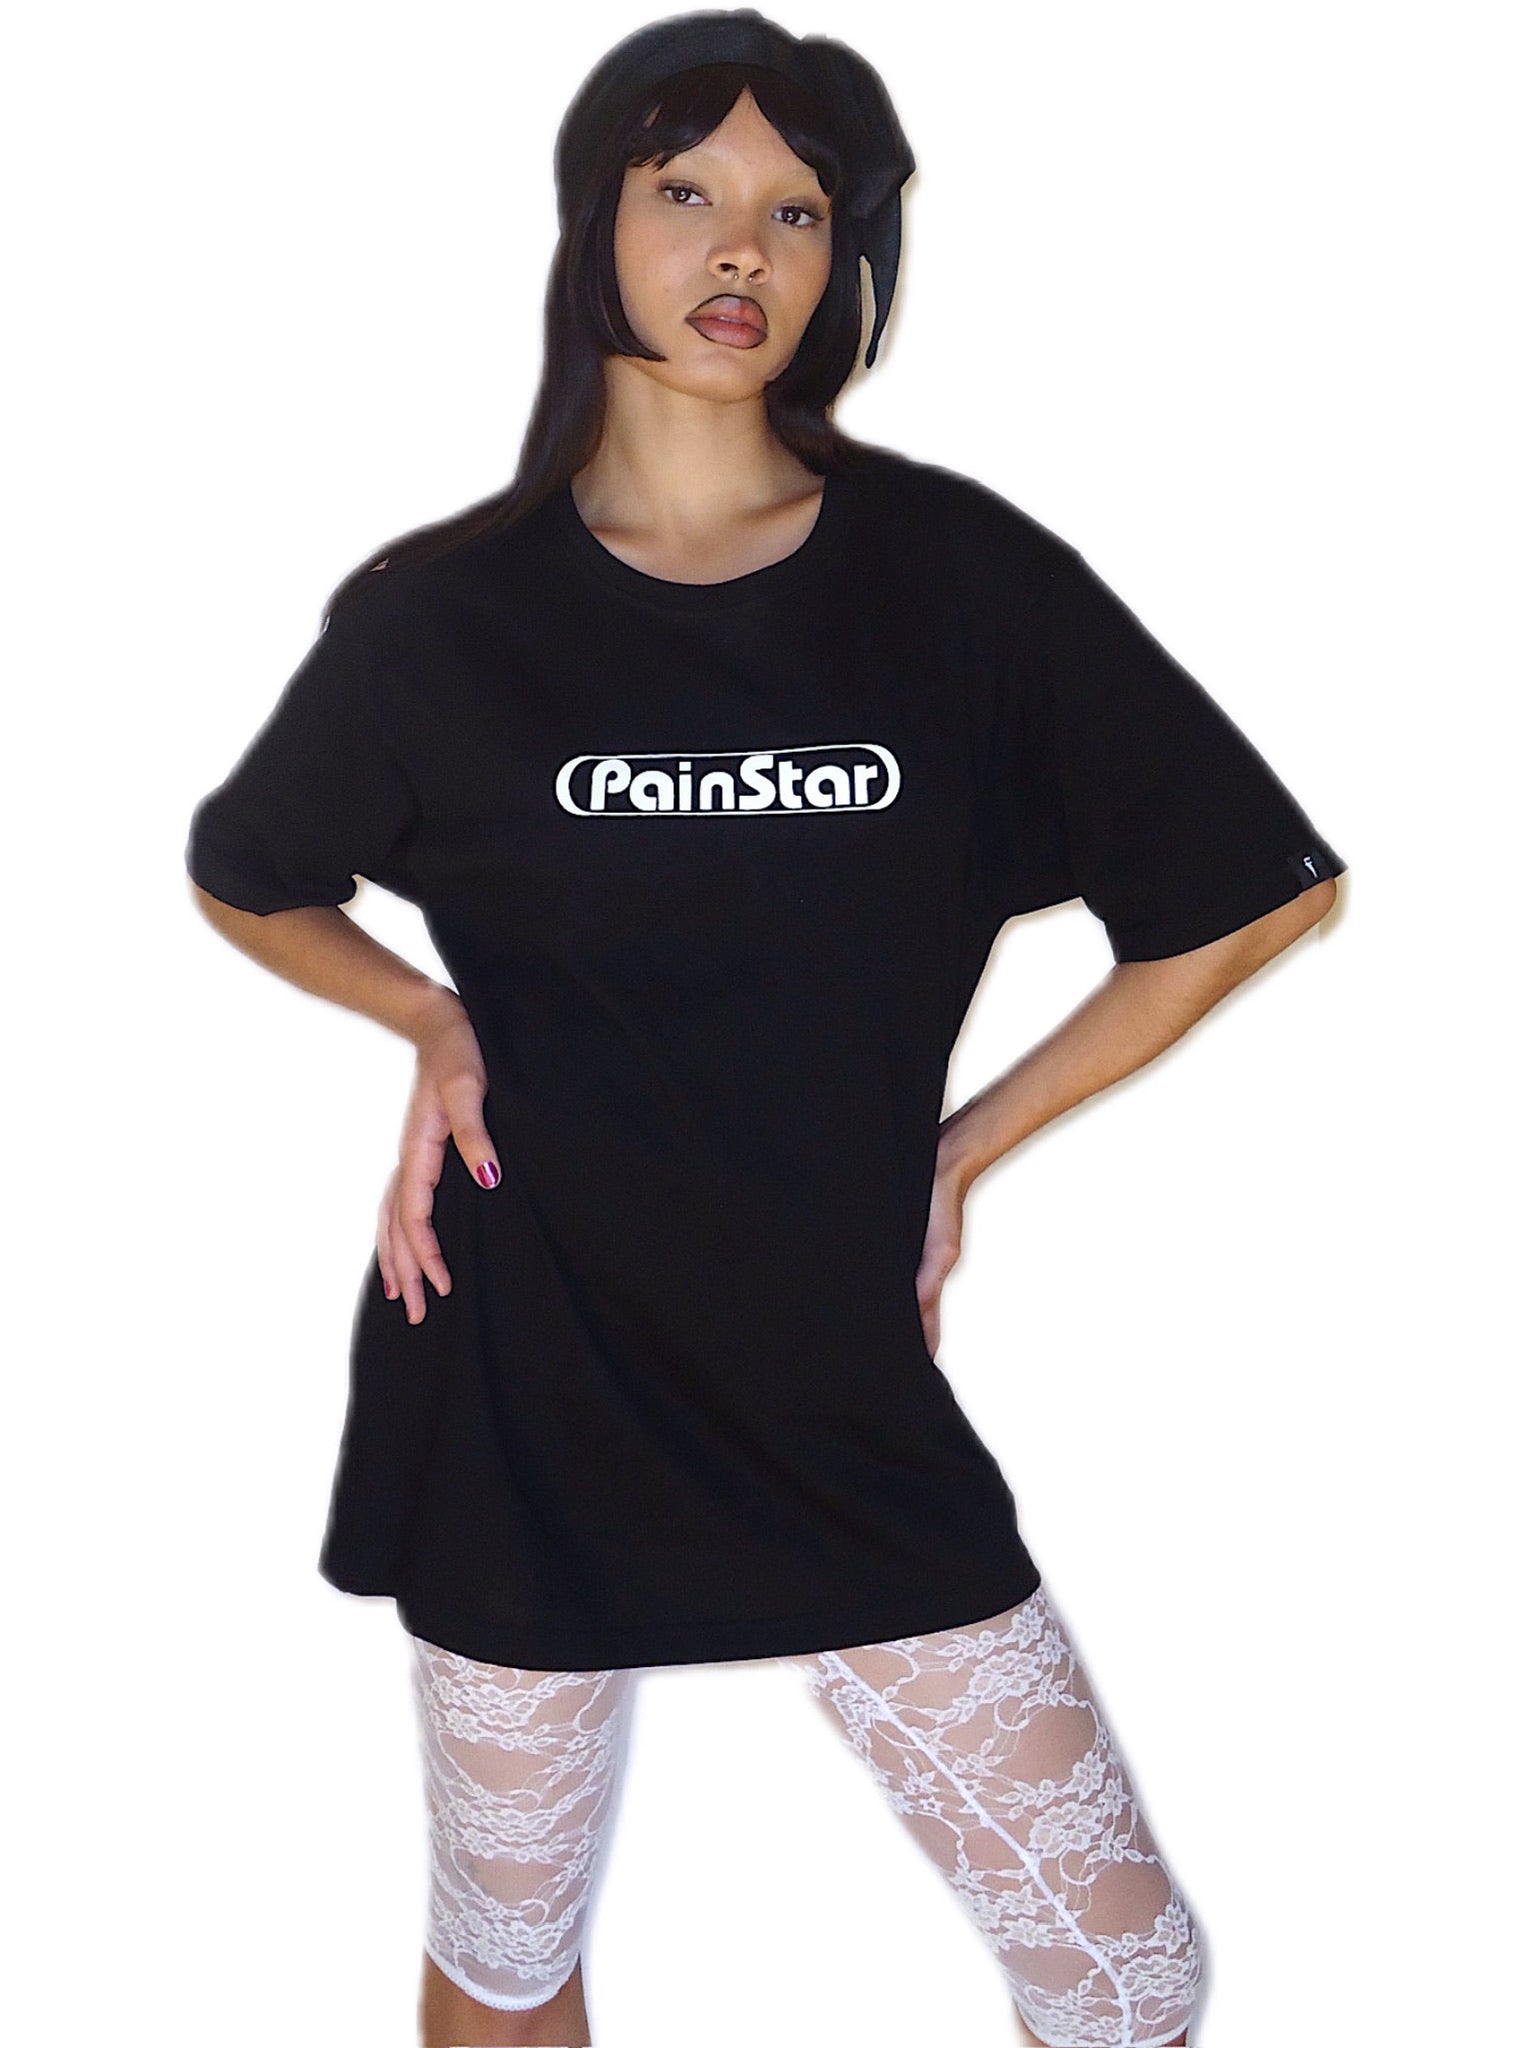 Painstar T-Shirt